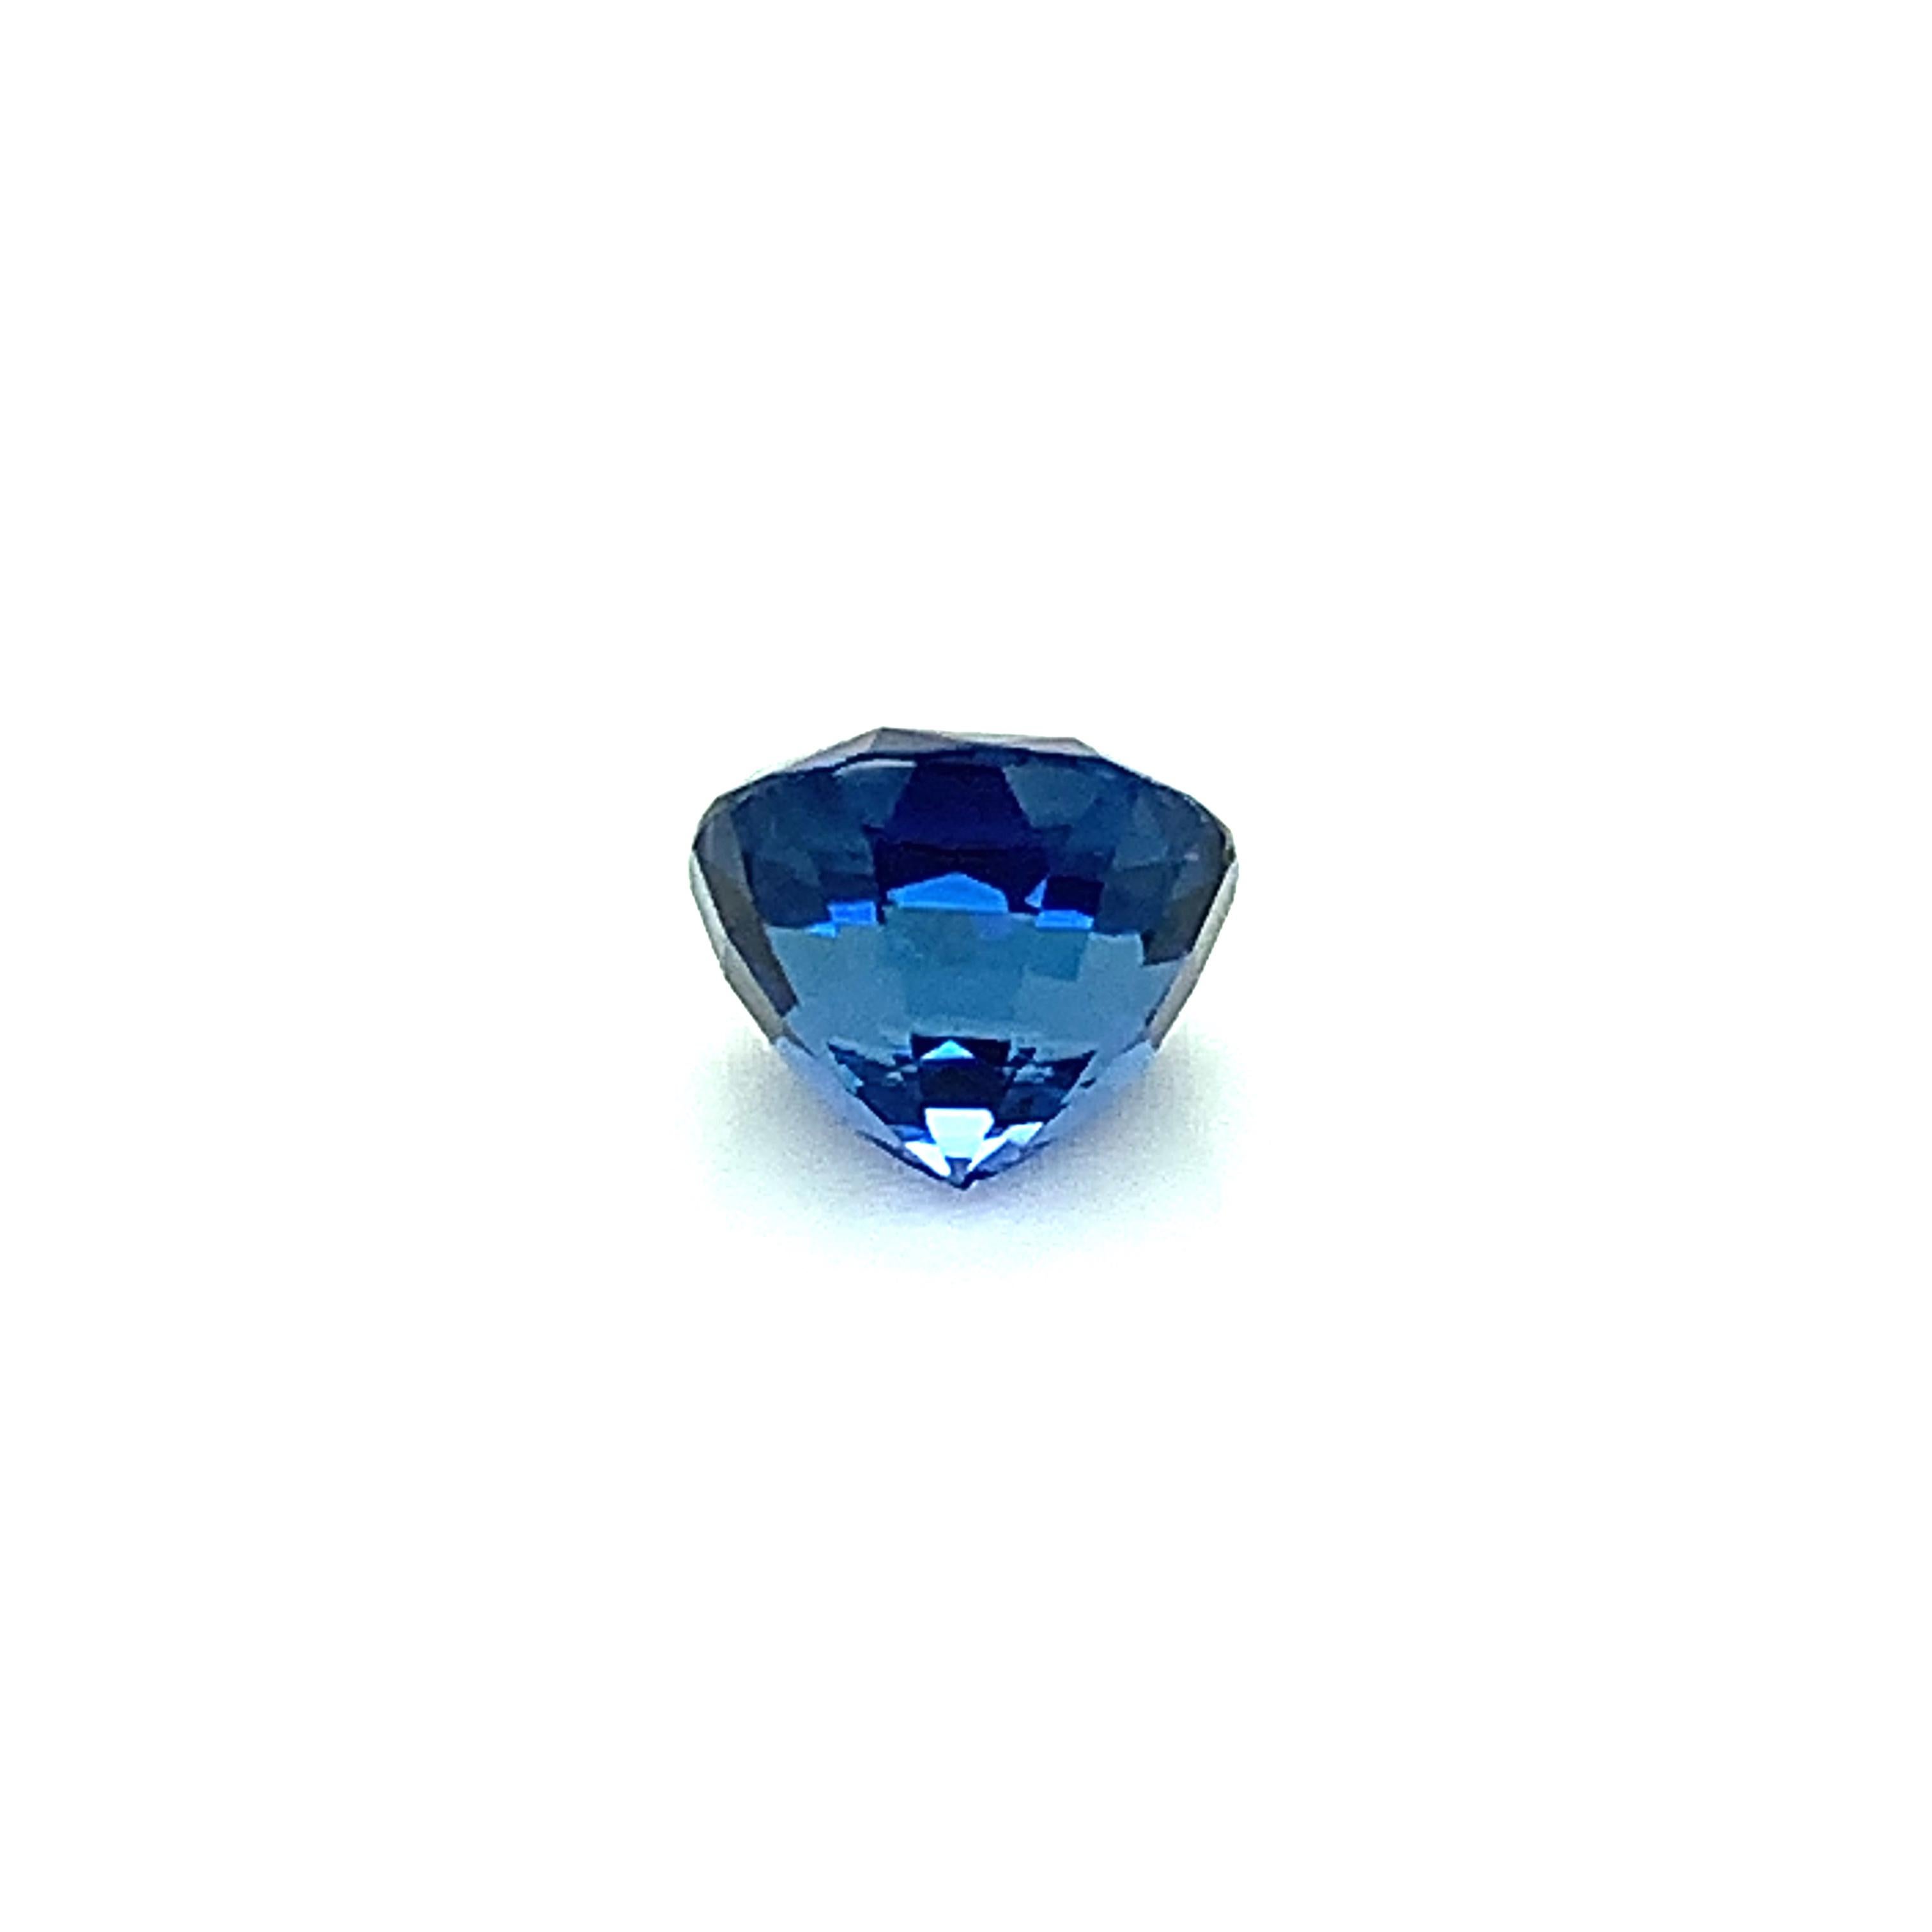 Women's or Men's Unheated 3.32 Carat Ceylon Blue Sapphire, Unset Loose Gemstone, GIA Certified